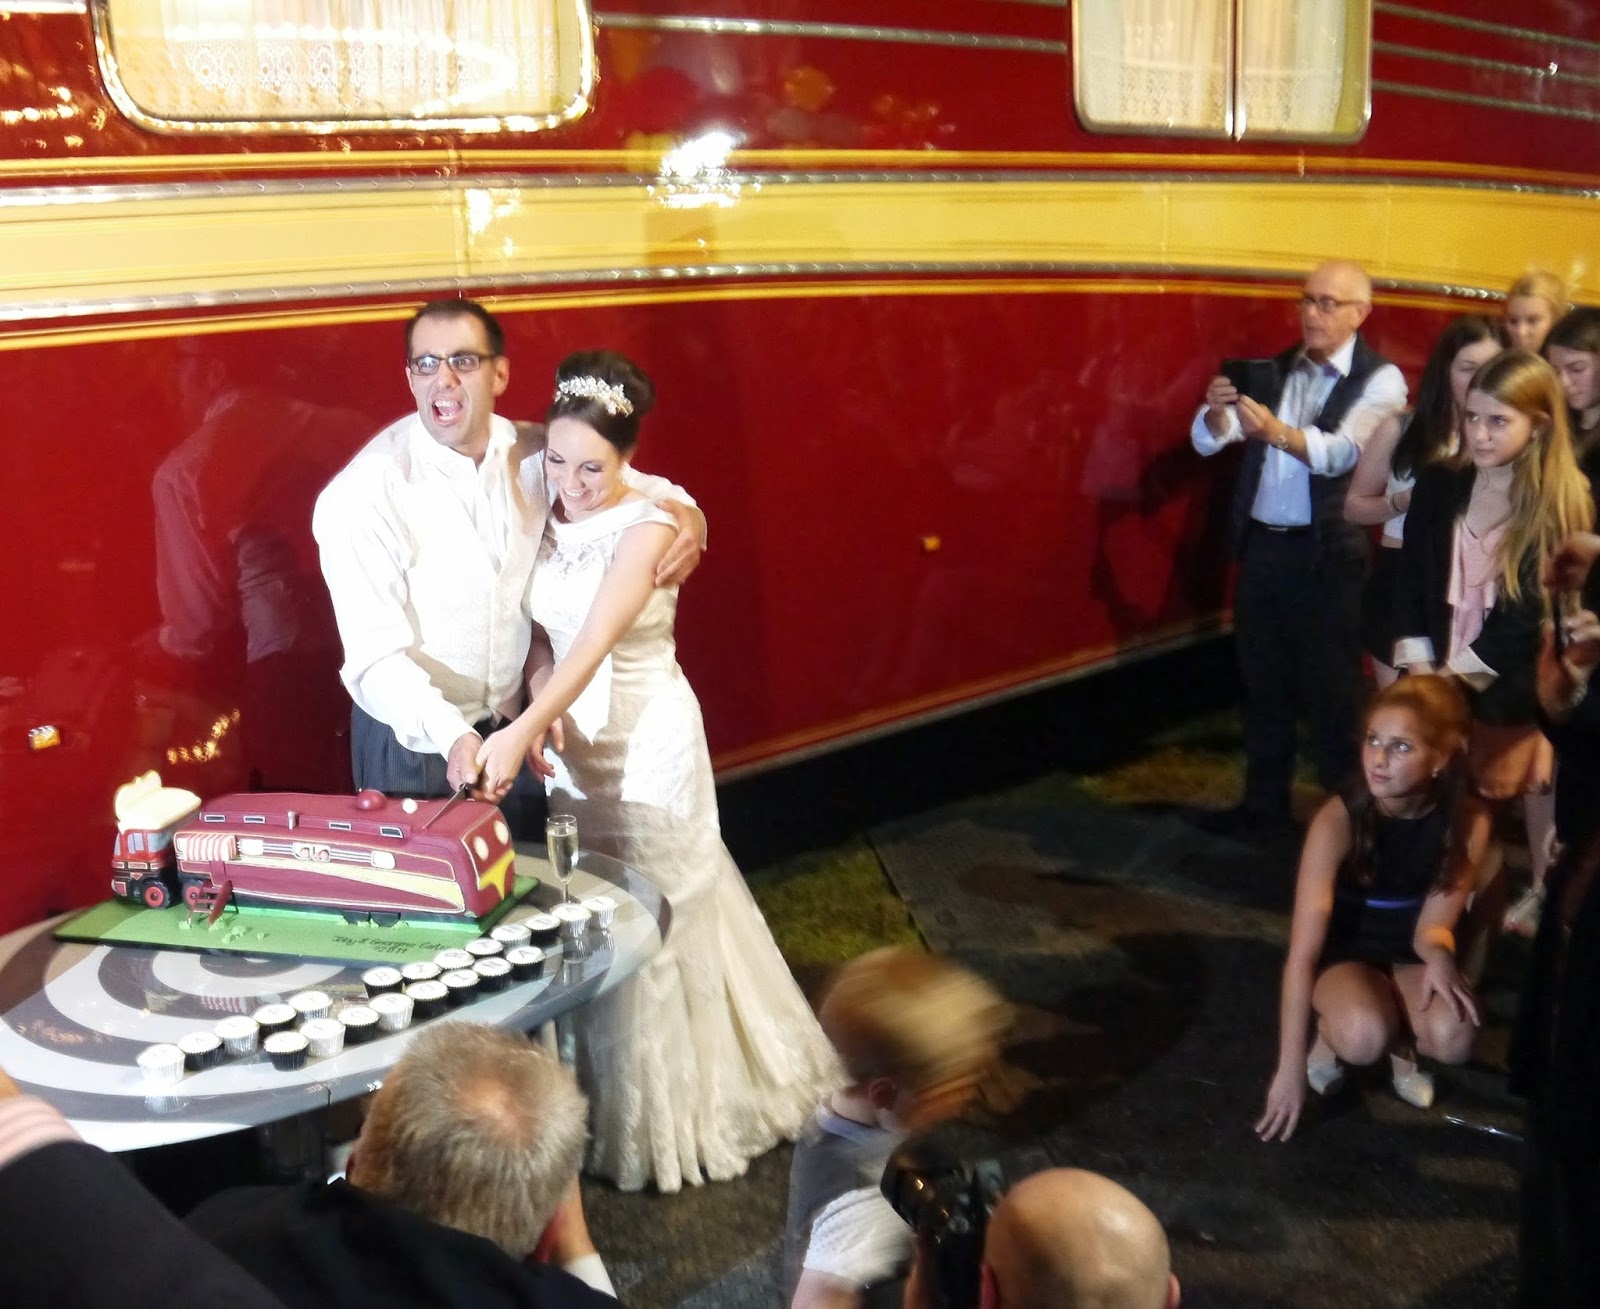 Carters Steam Fair Wedding - Cutting the wedding cake